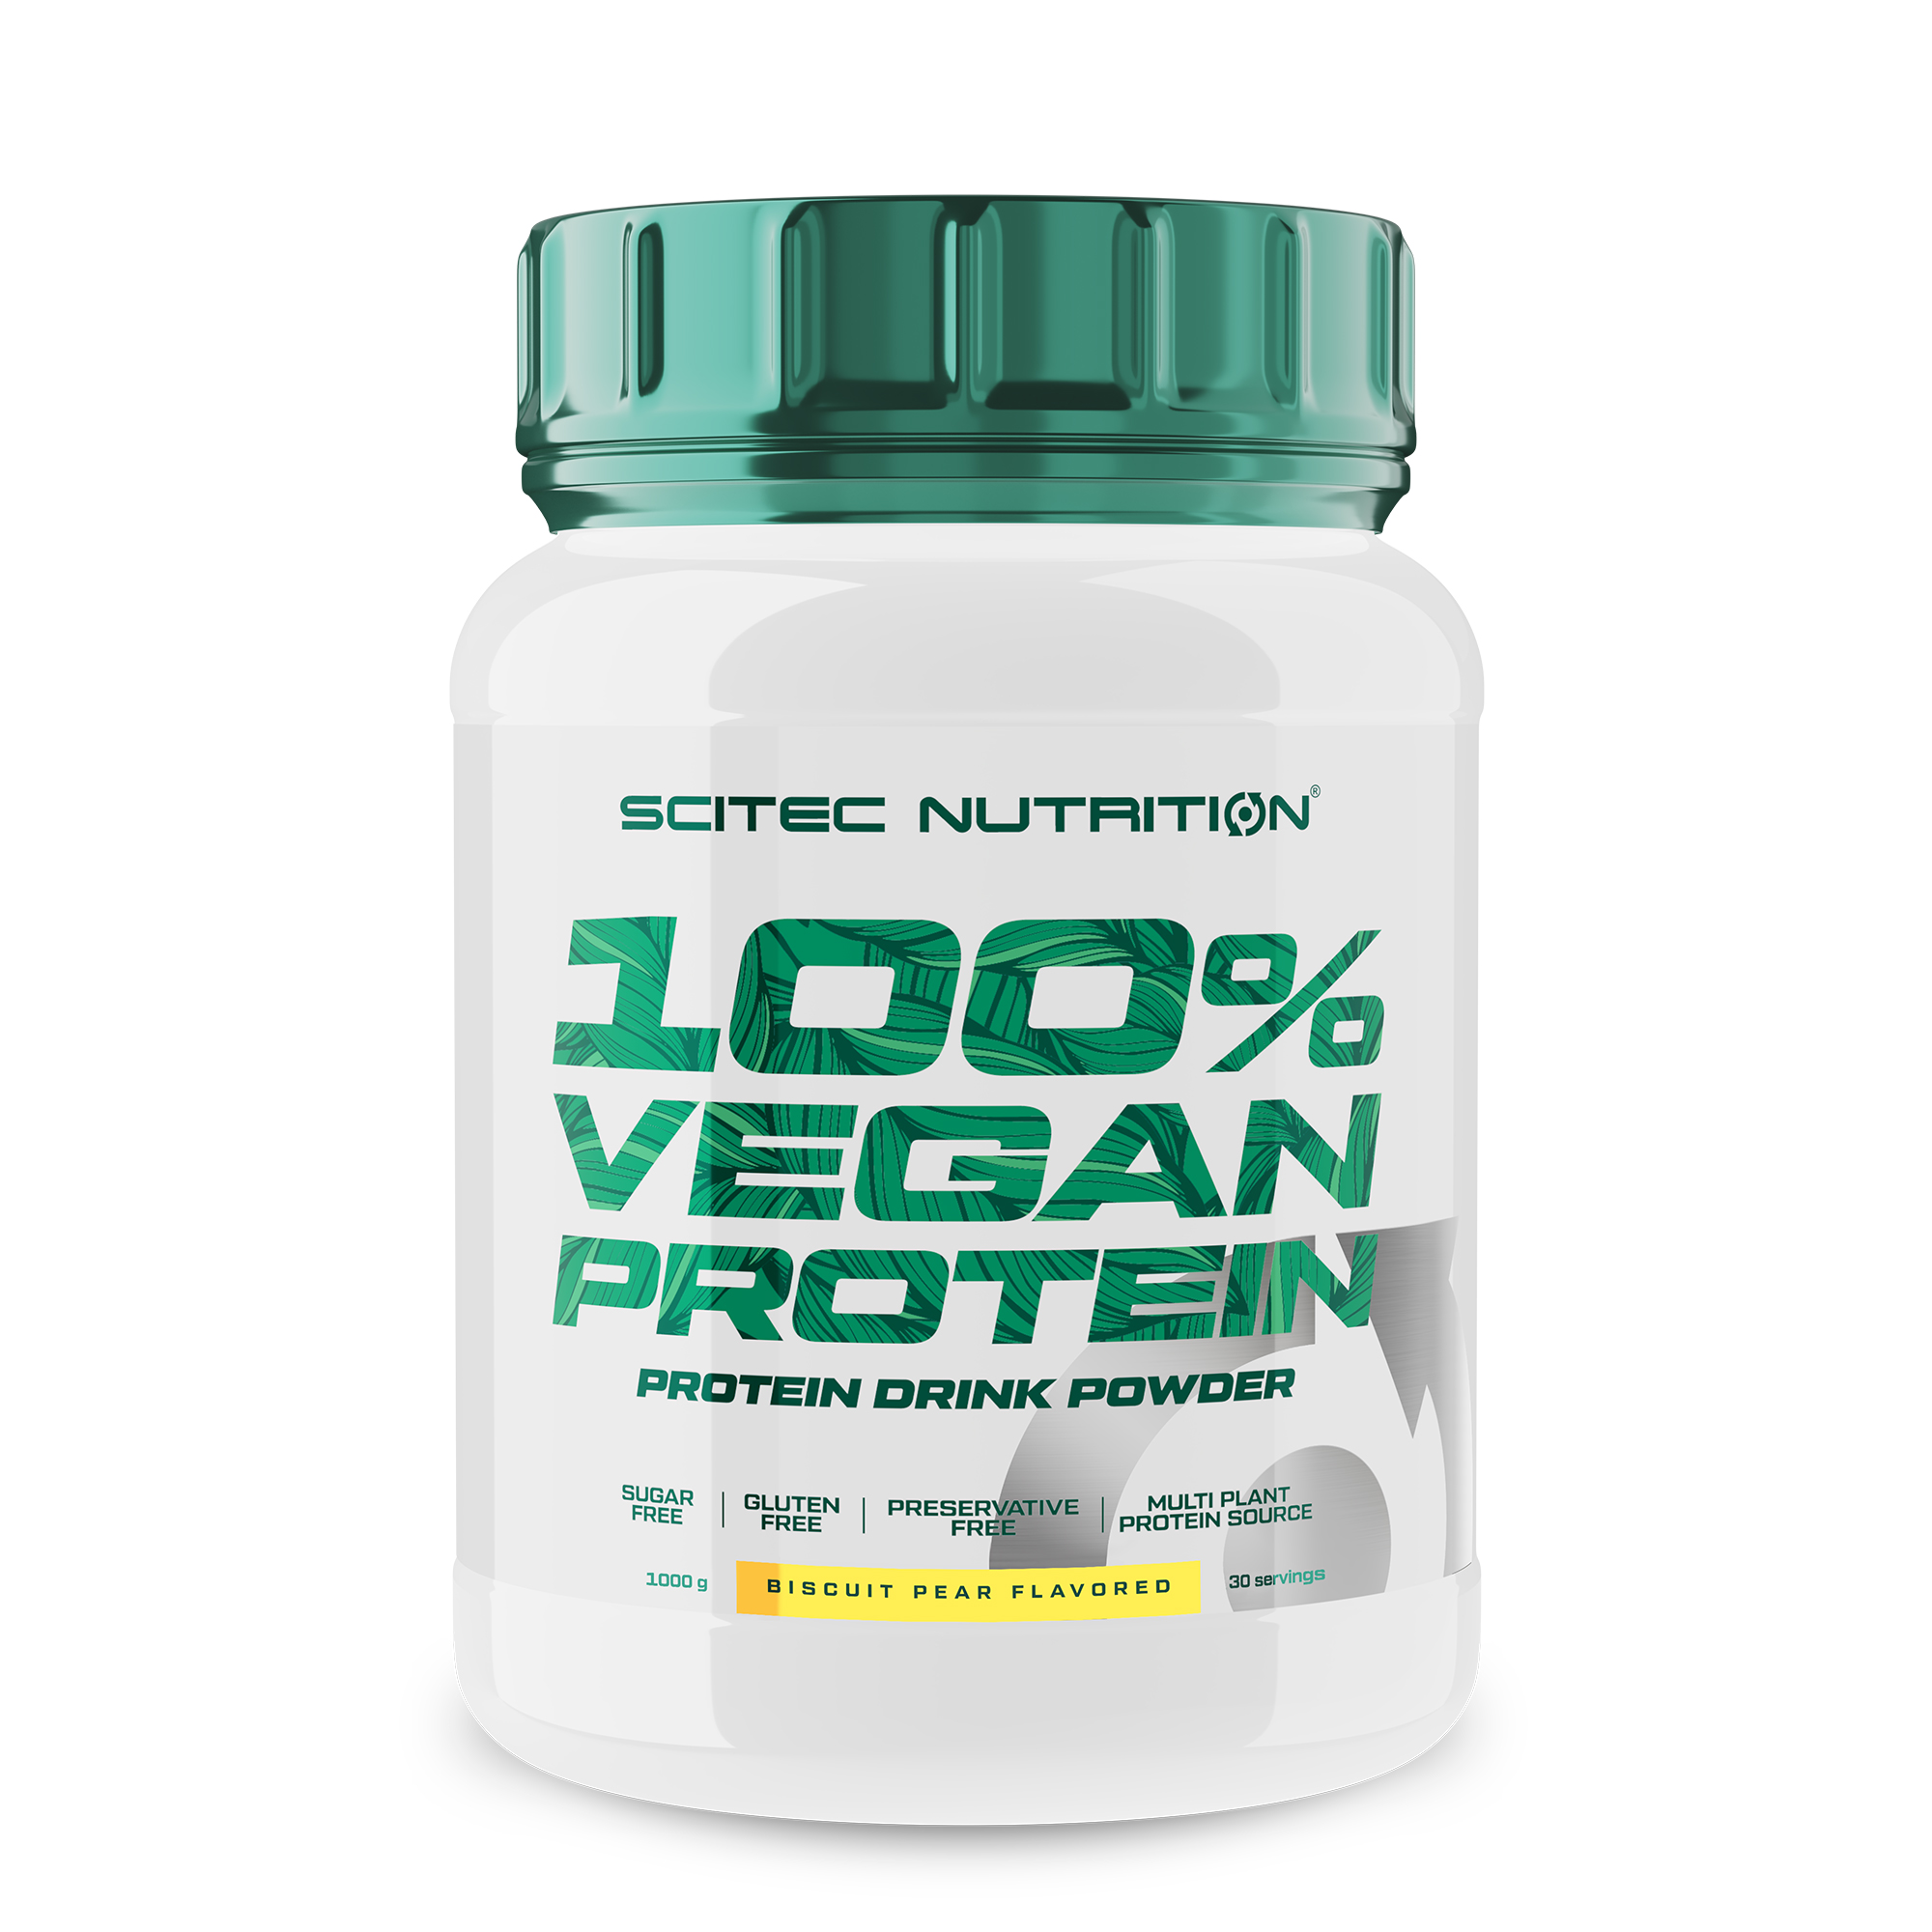 Scitec nutrition 100. 100% Vegan Protein 1000 гр (Scitec Nutrition). Scitec Nutrition 100% Whey Protein 1000gr. Scitec Nutrition 100% Vegan Protein - бисквит-груша 1000 г.. Scitec Nutrition протеин ваниль.